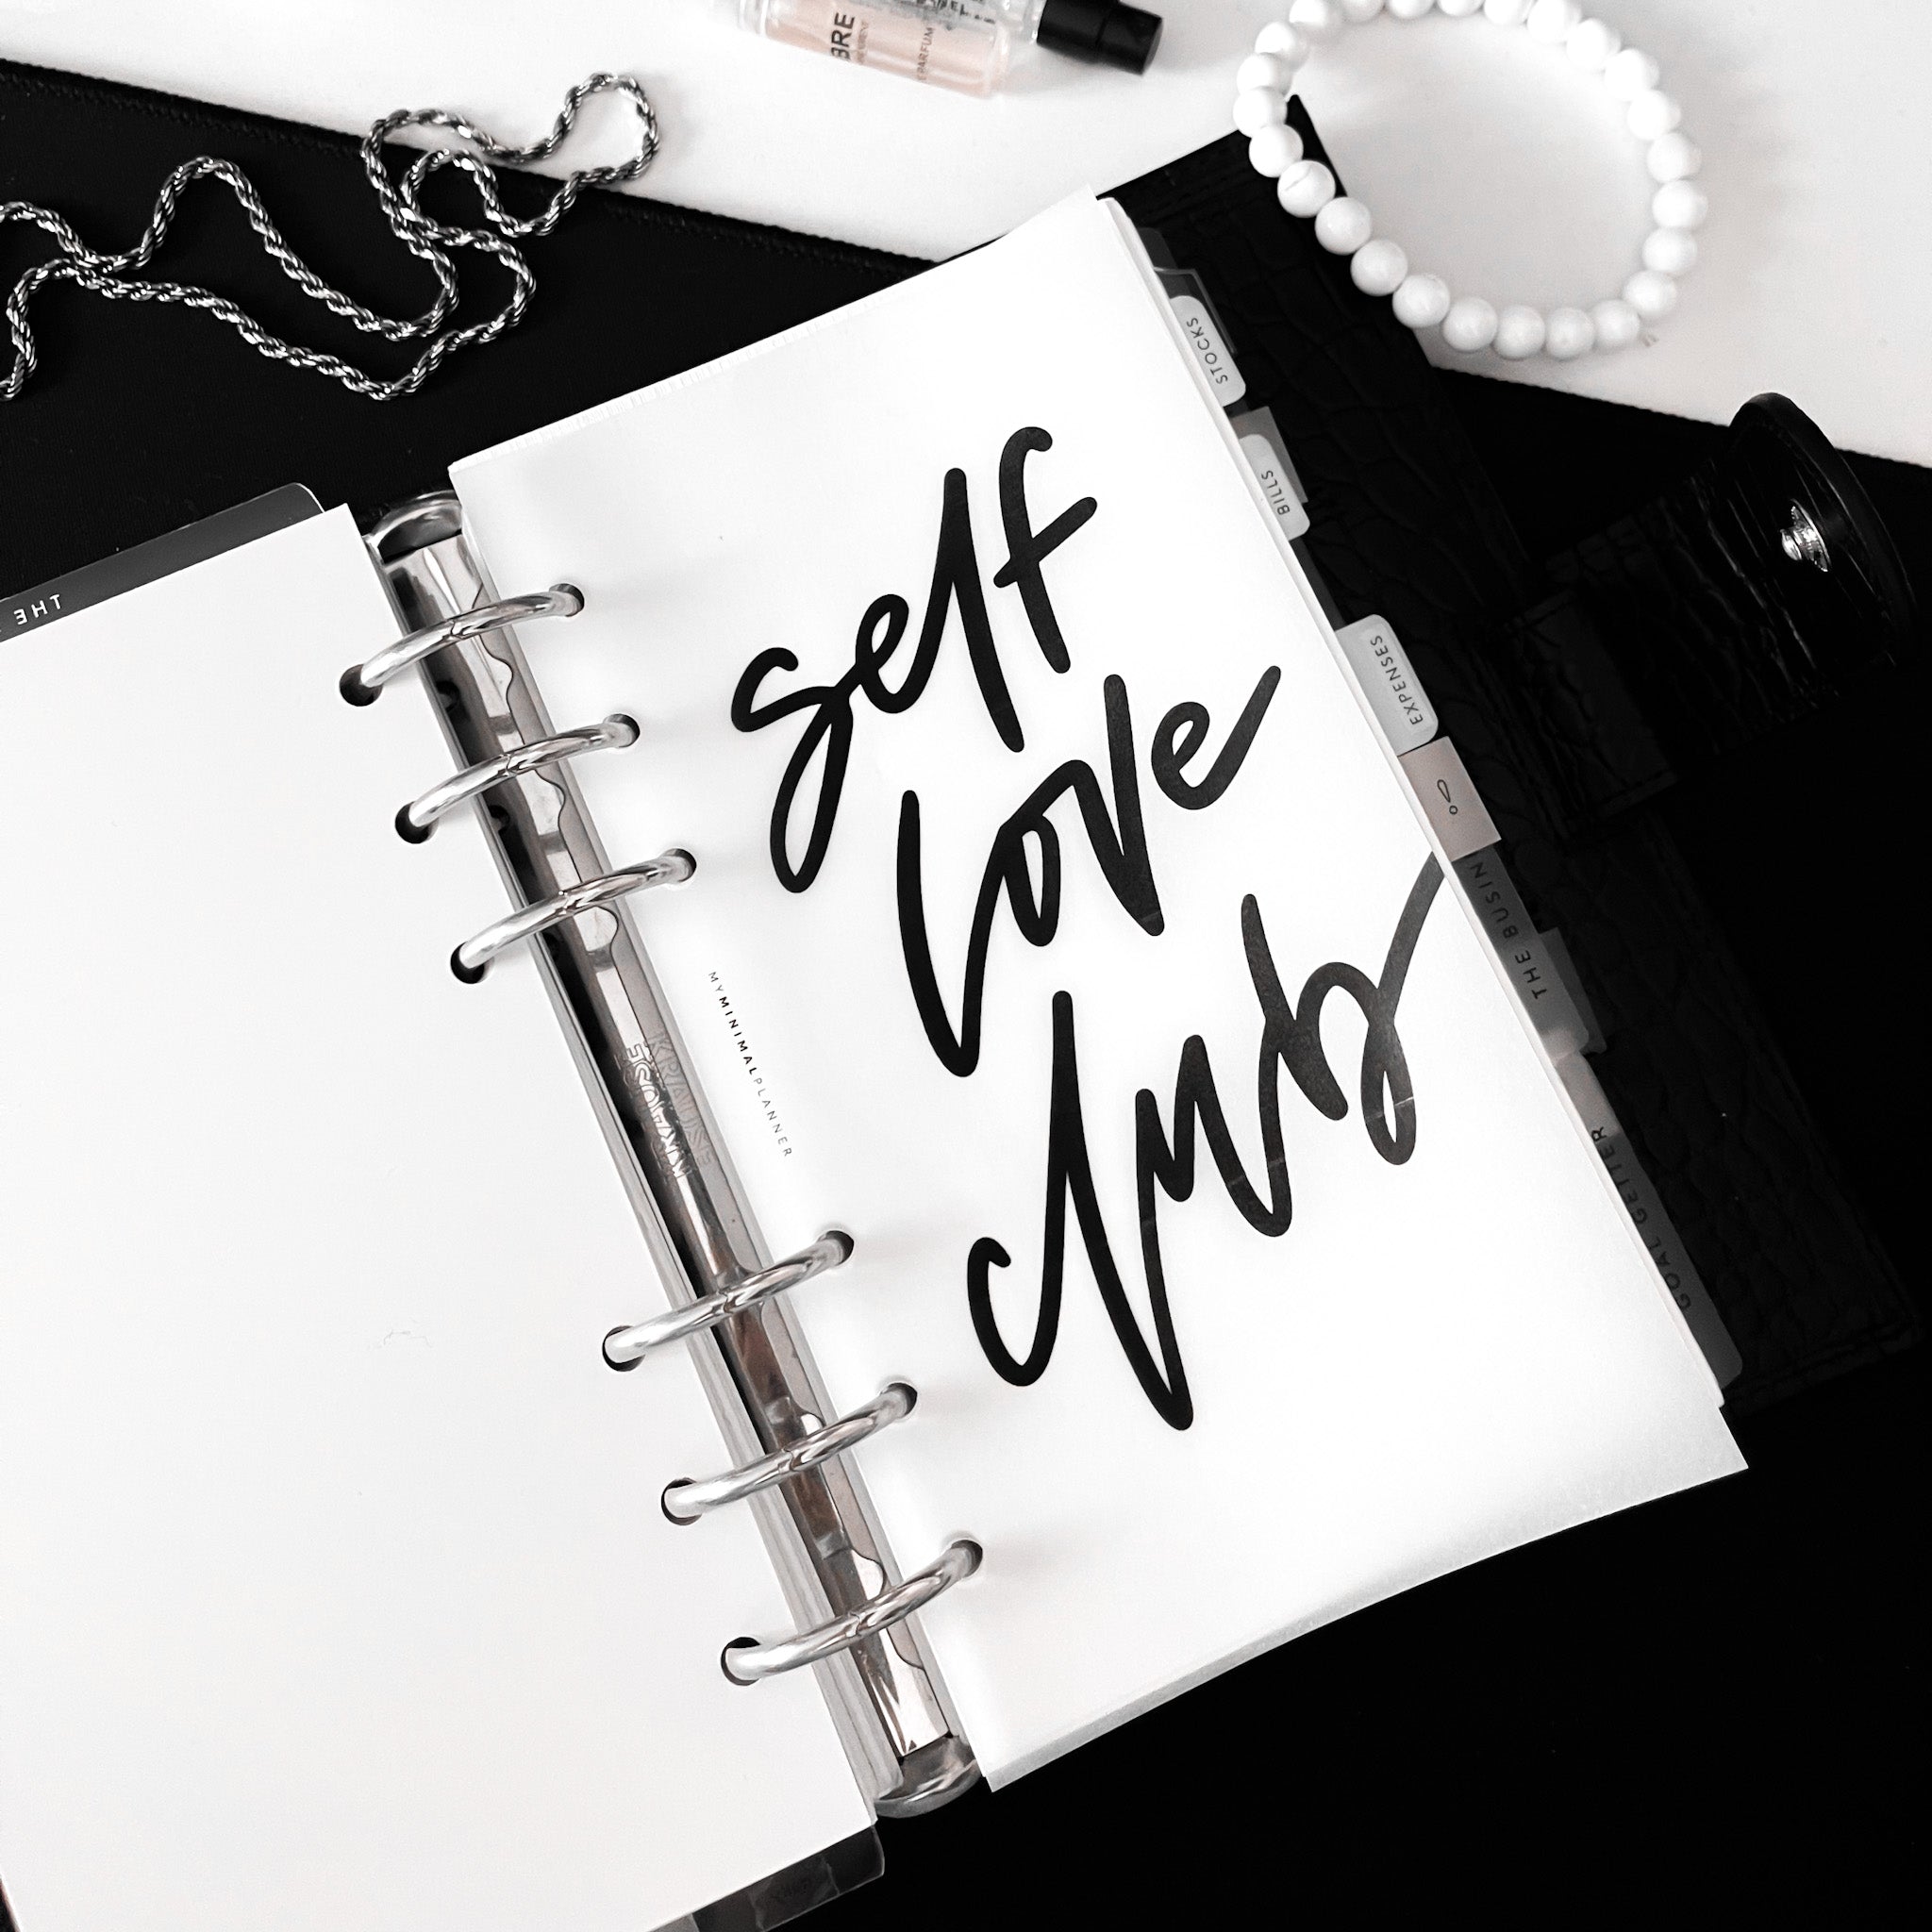 PRD111 - Self Love Club - Printable Dashboard